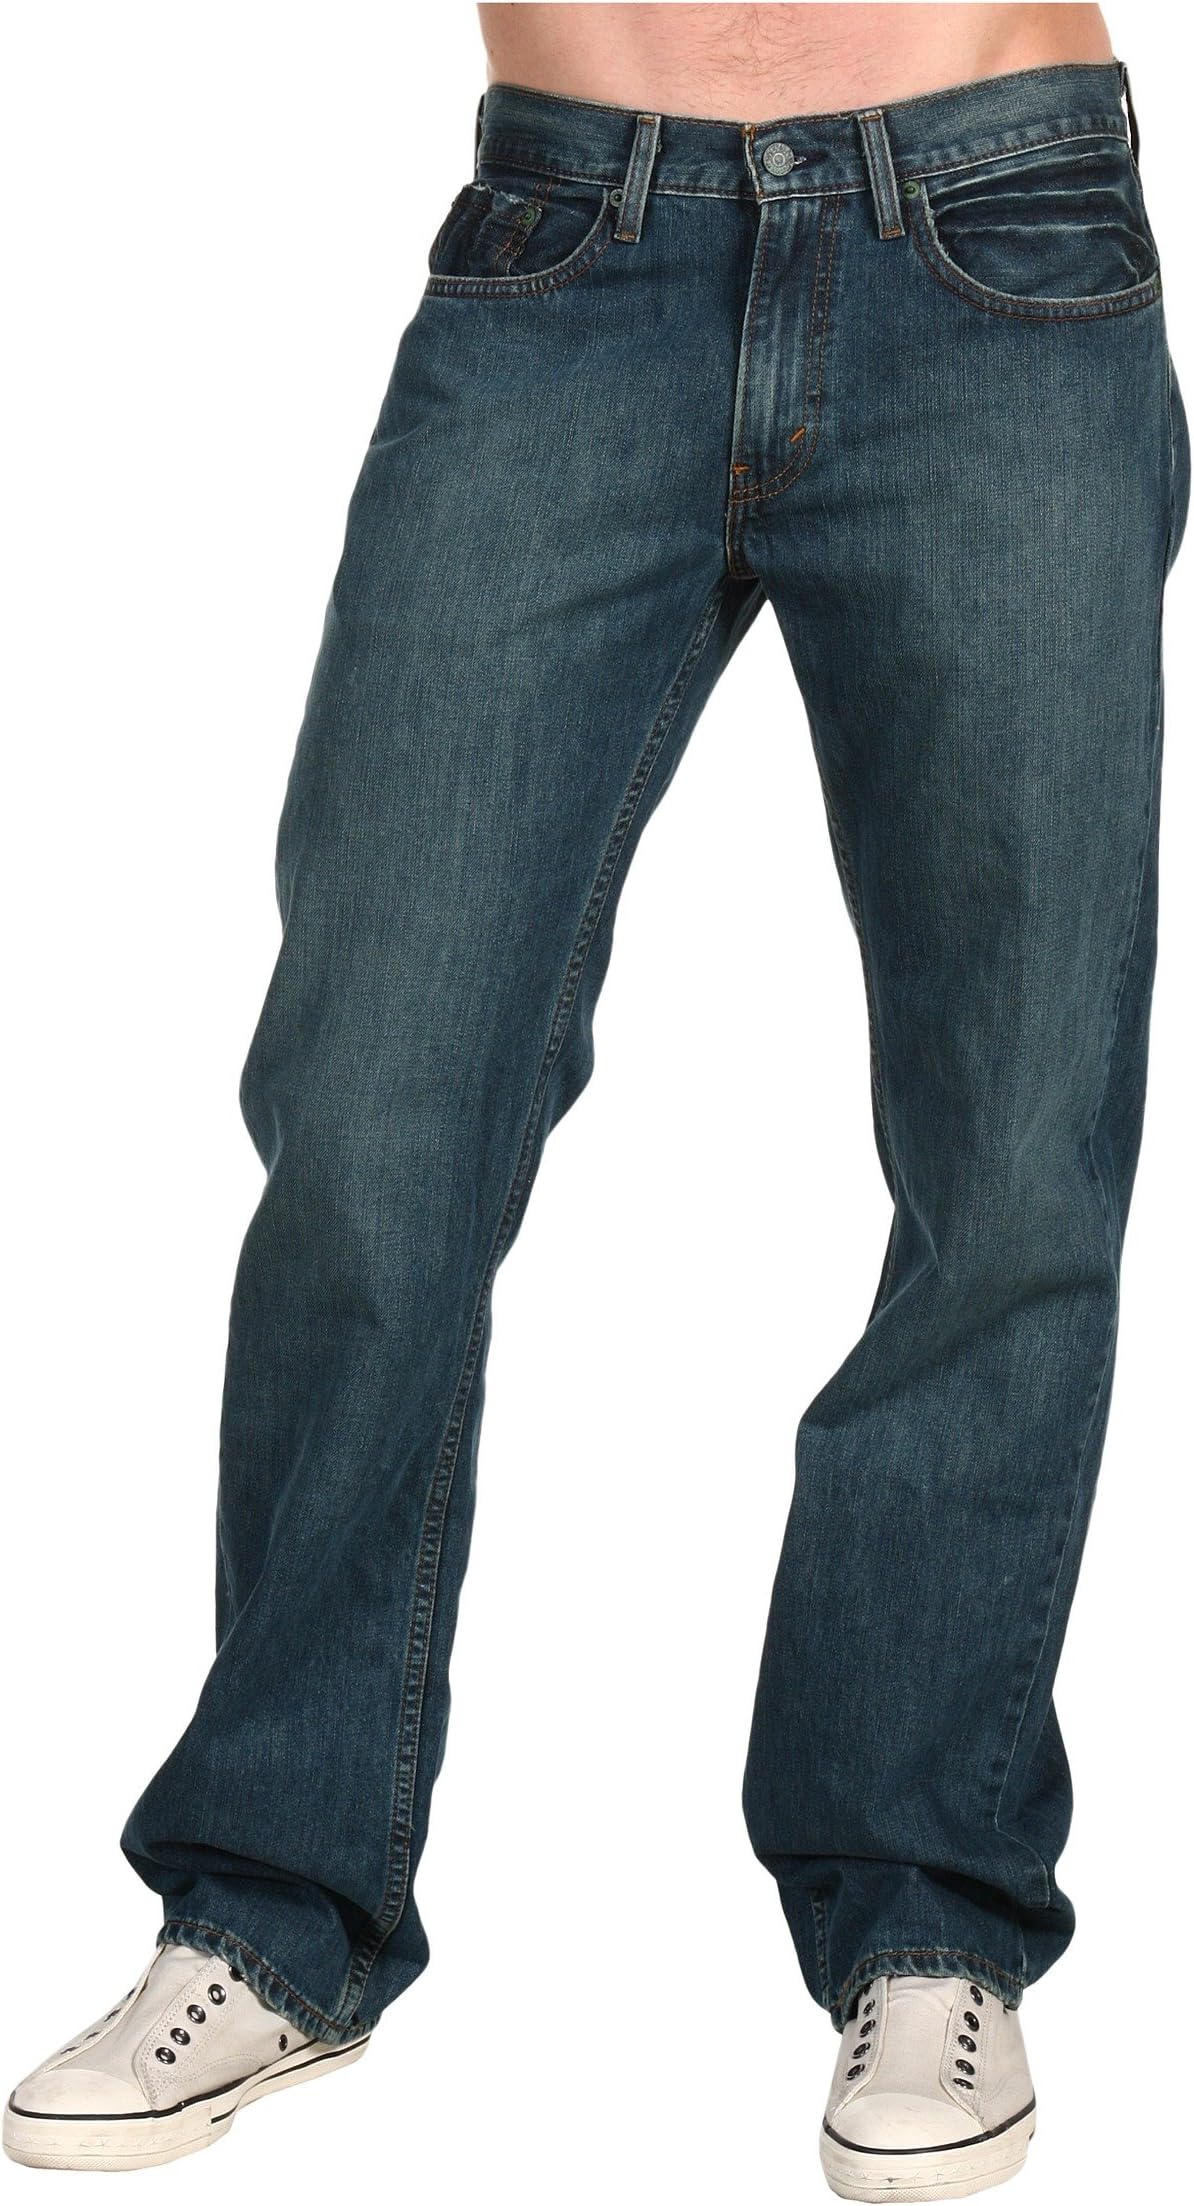 Левис 559. Levi's Relaxed джинсы мужские. Модель 559 Levis. Левайс Subzero. Levis описание модели